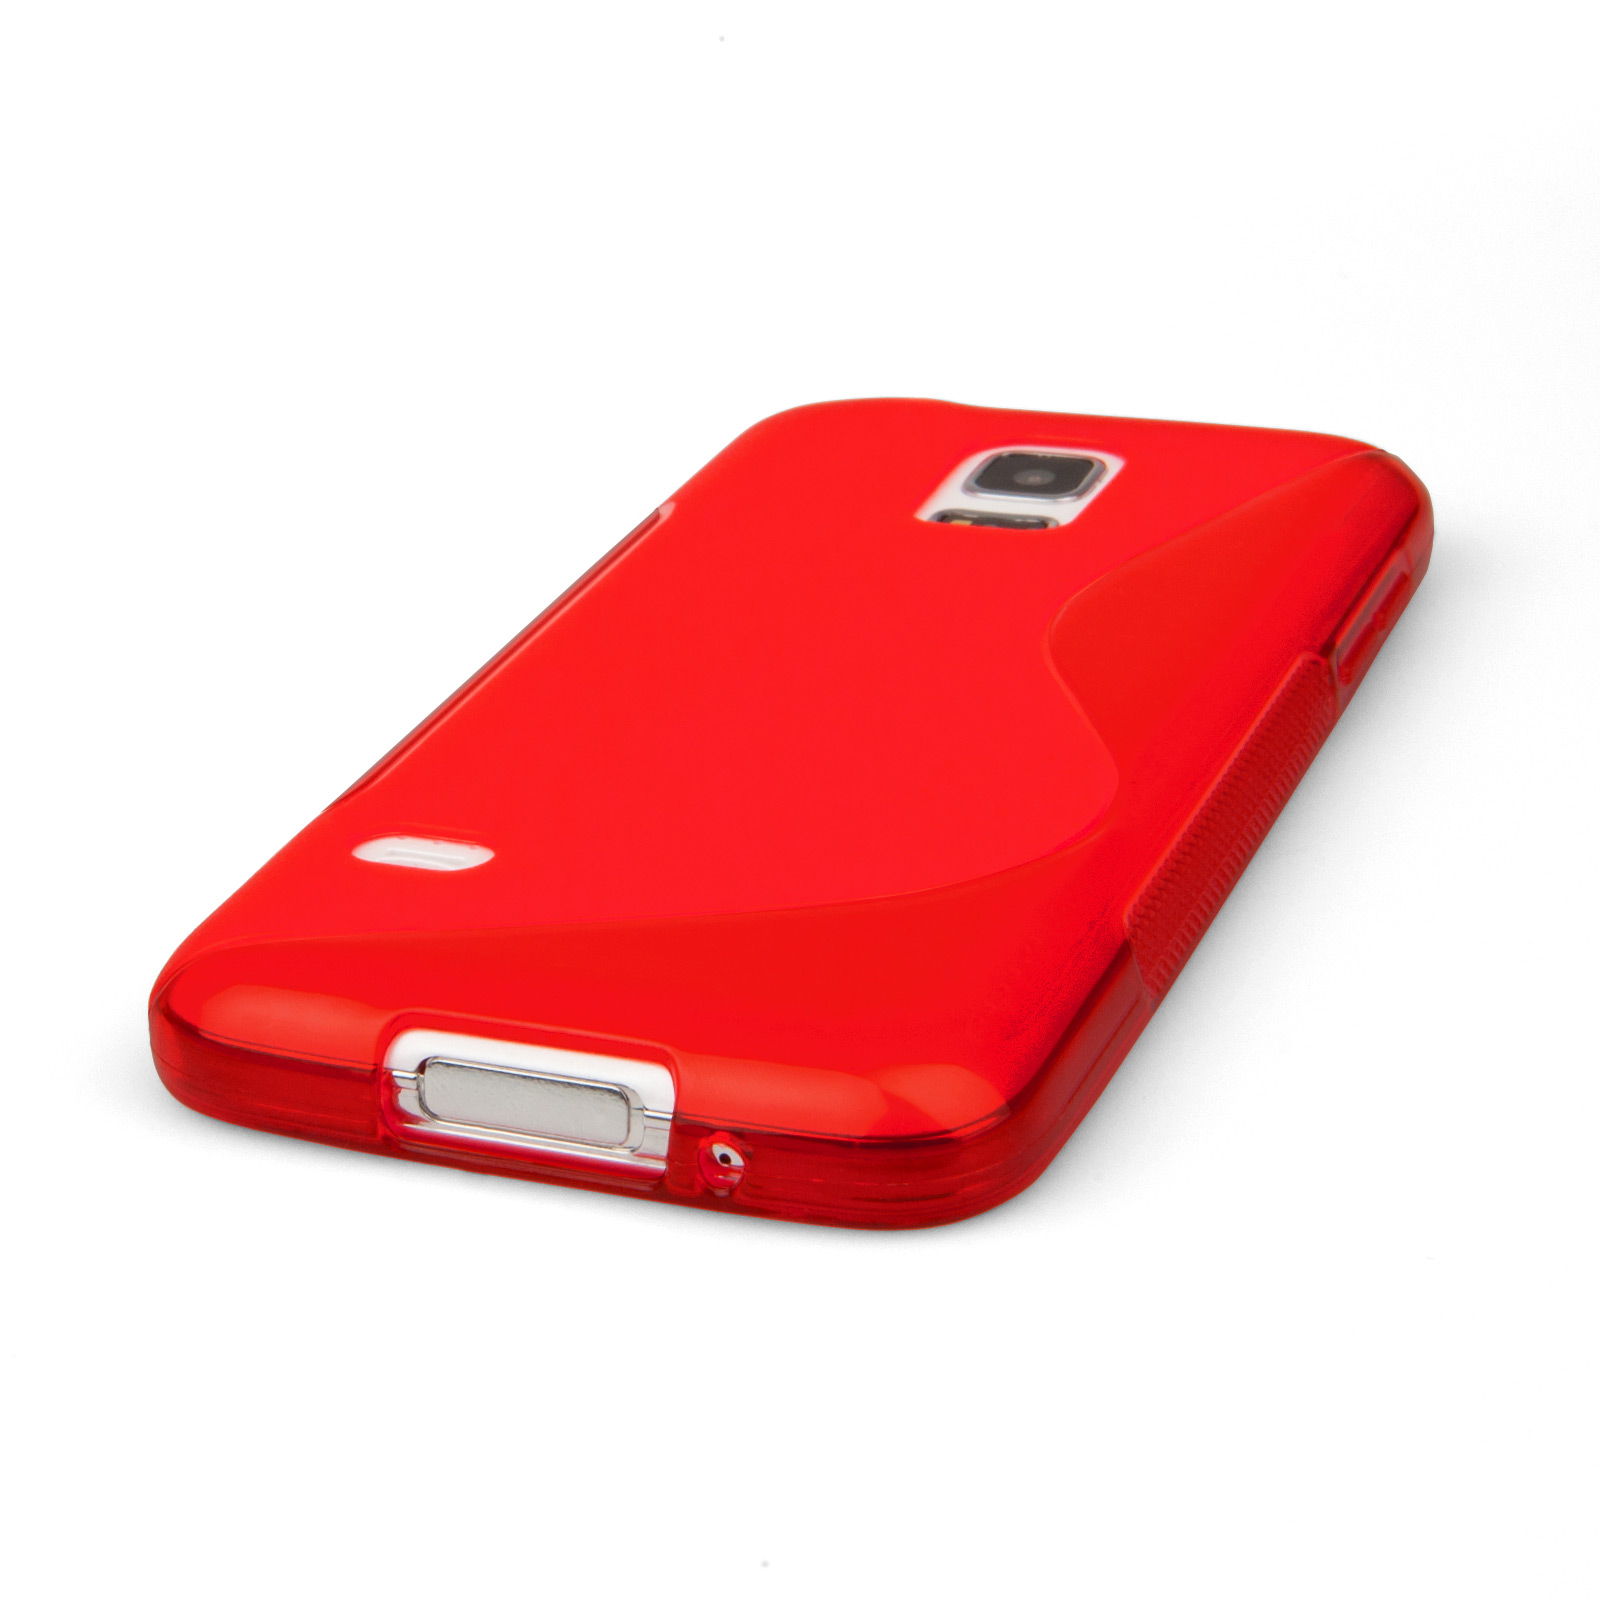 Caseflex Samsung Galaxy S5 Mini Silicone Gel S-Line Case - Red